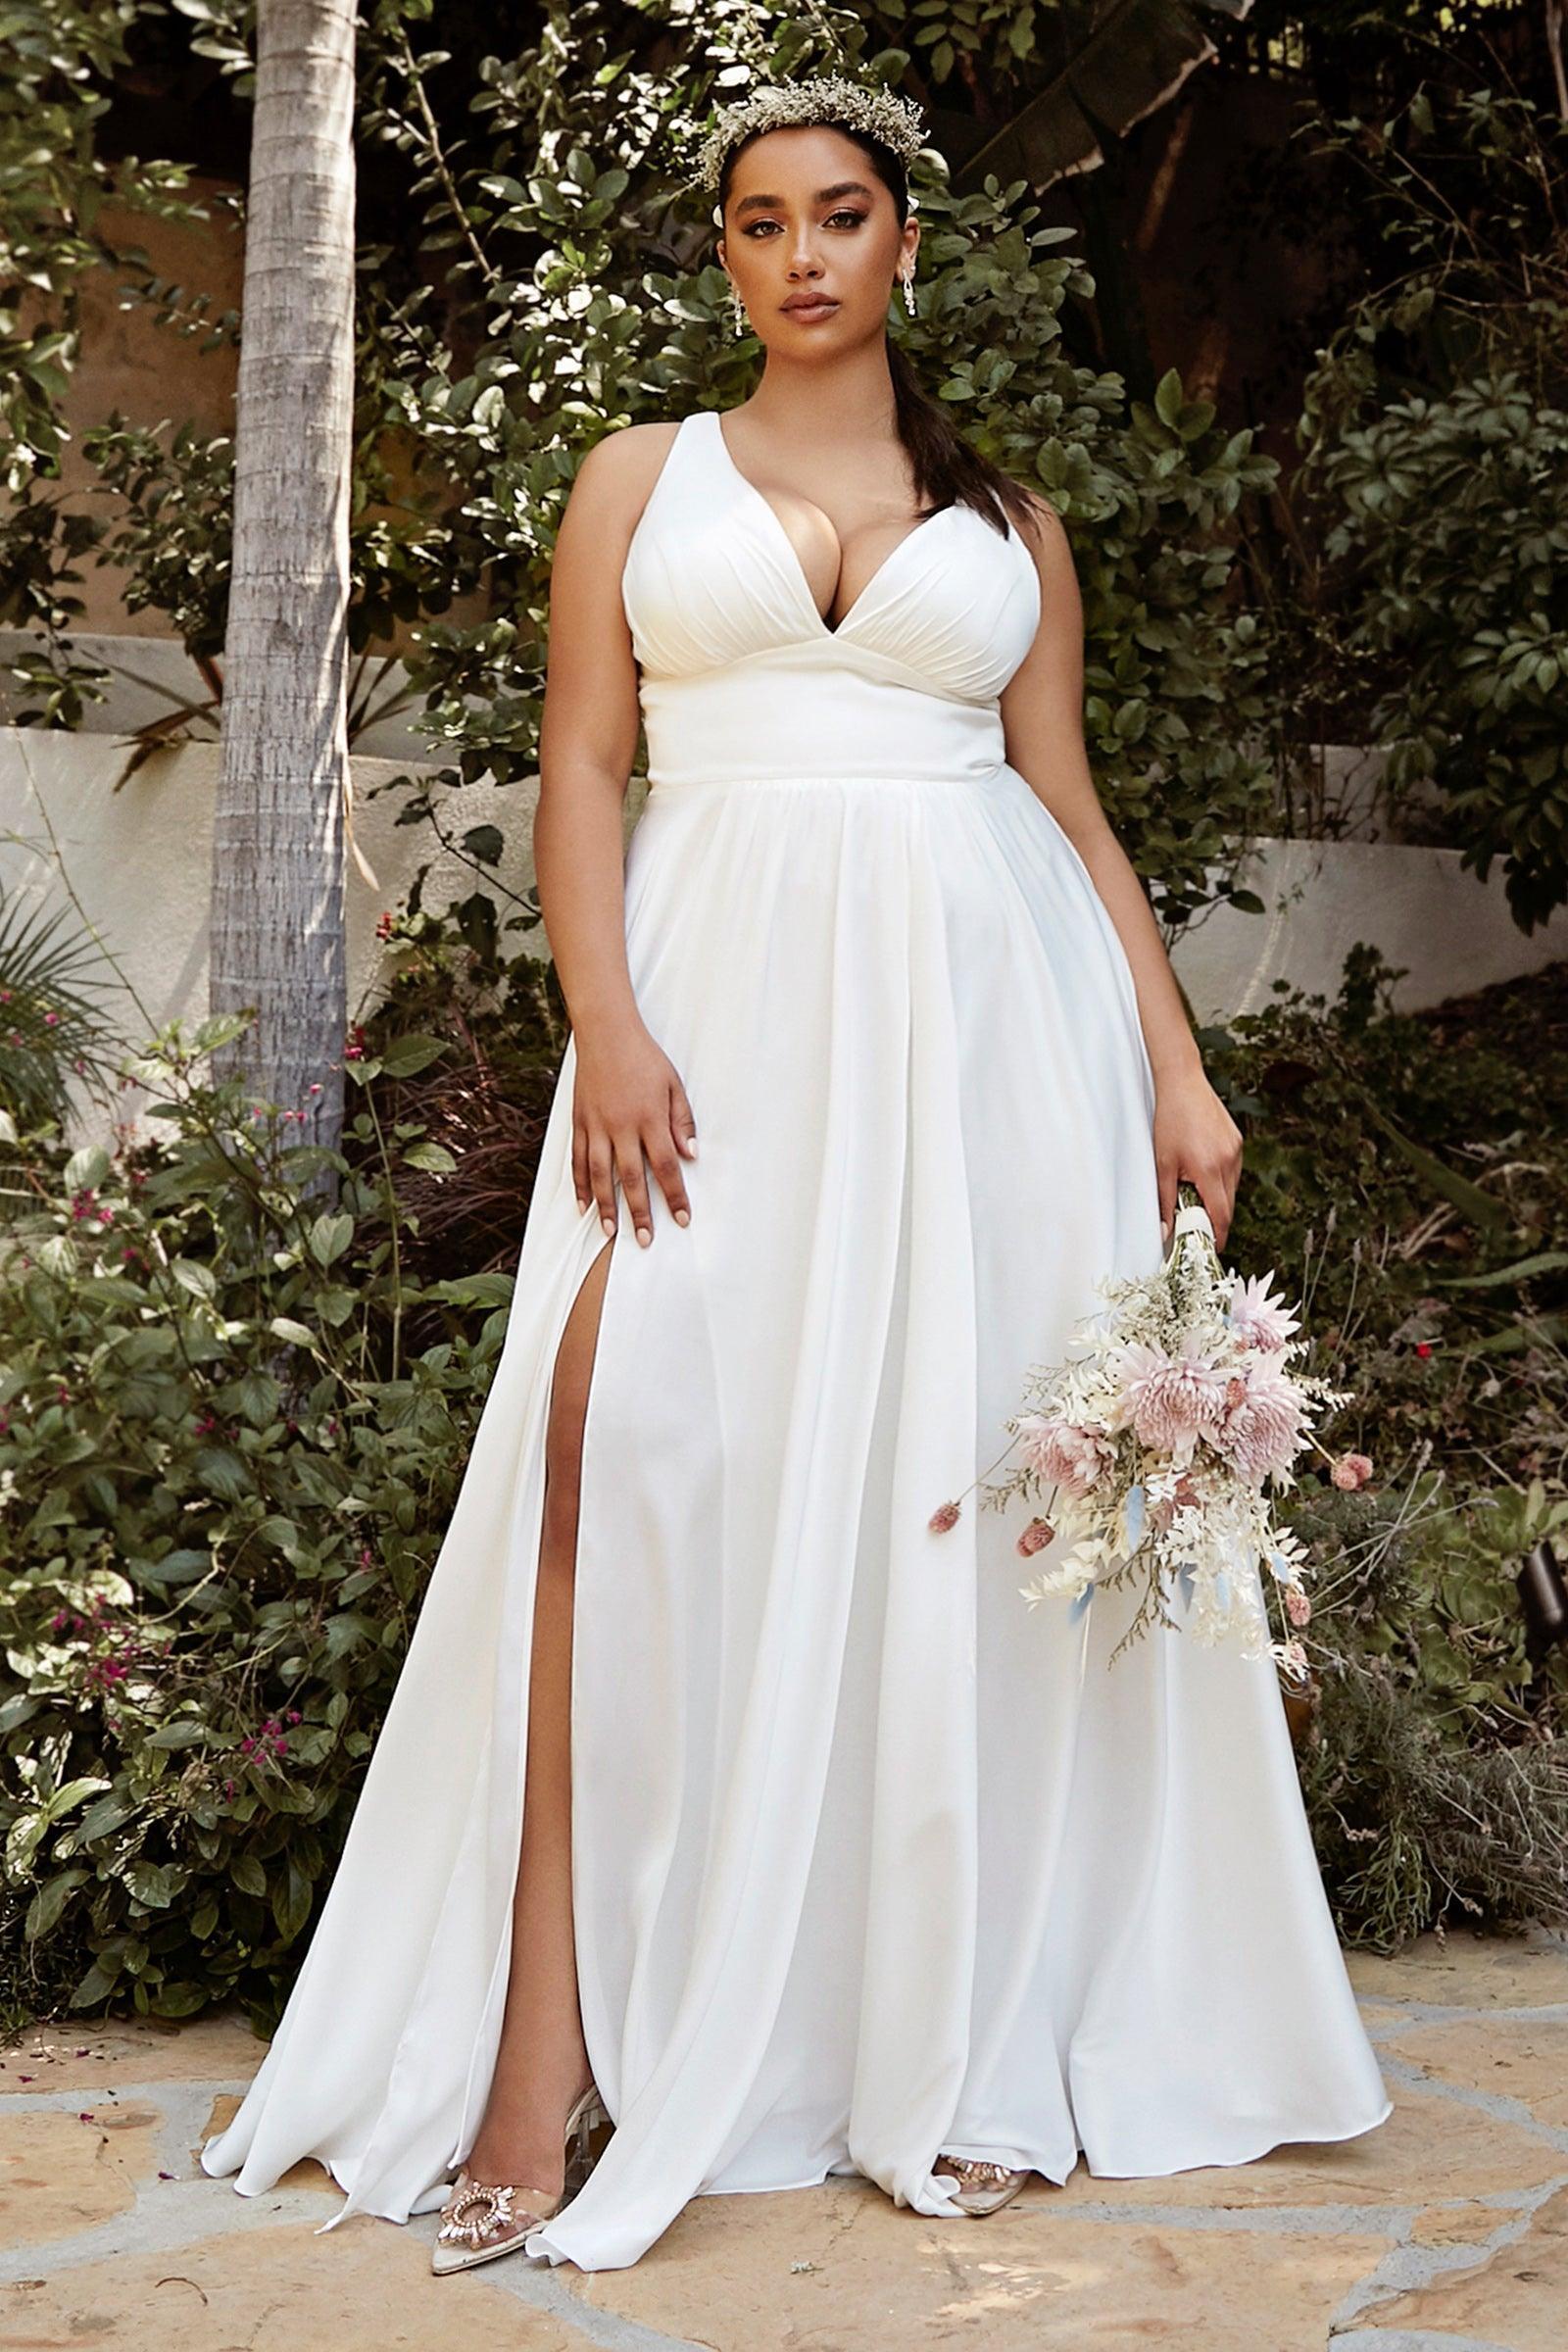 affordable plus size wedding dresses